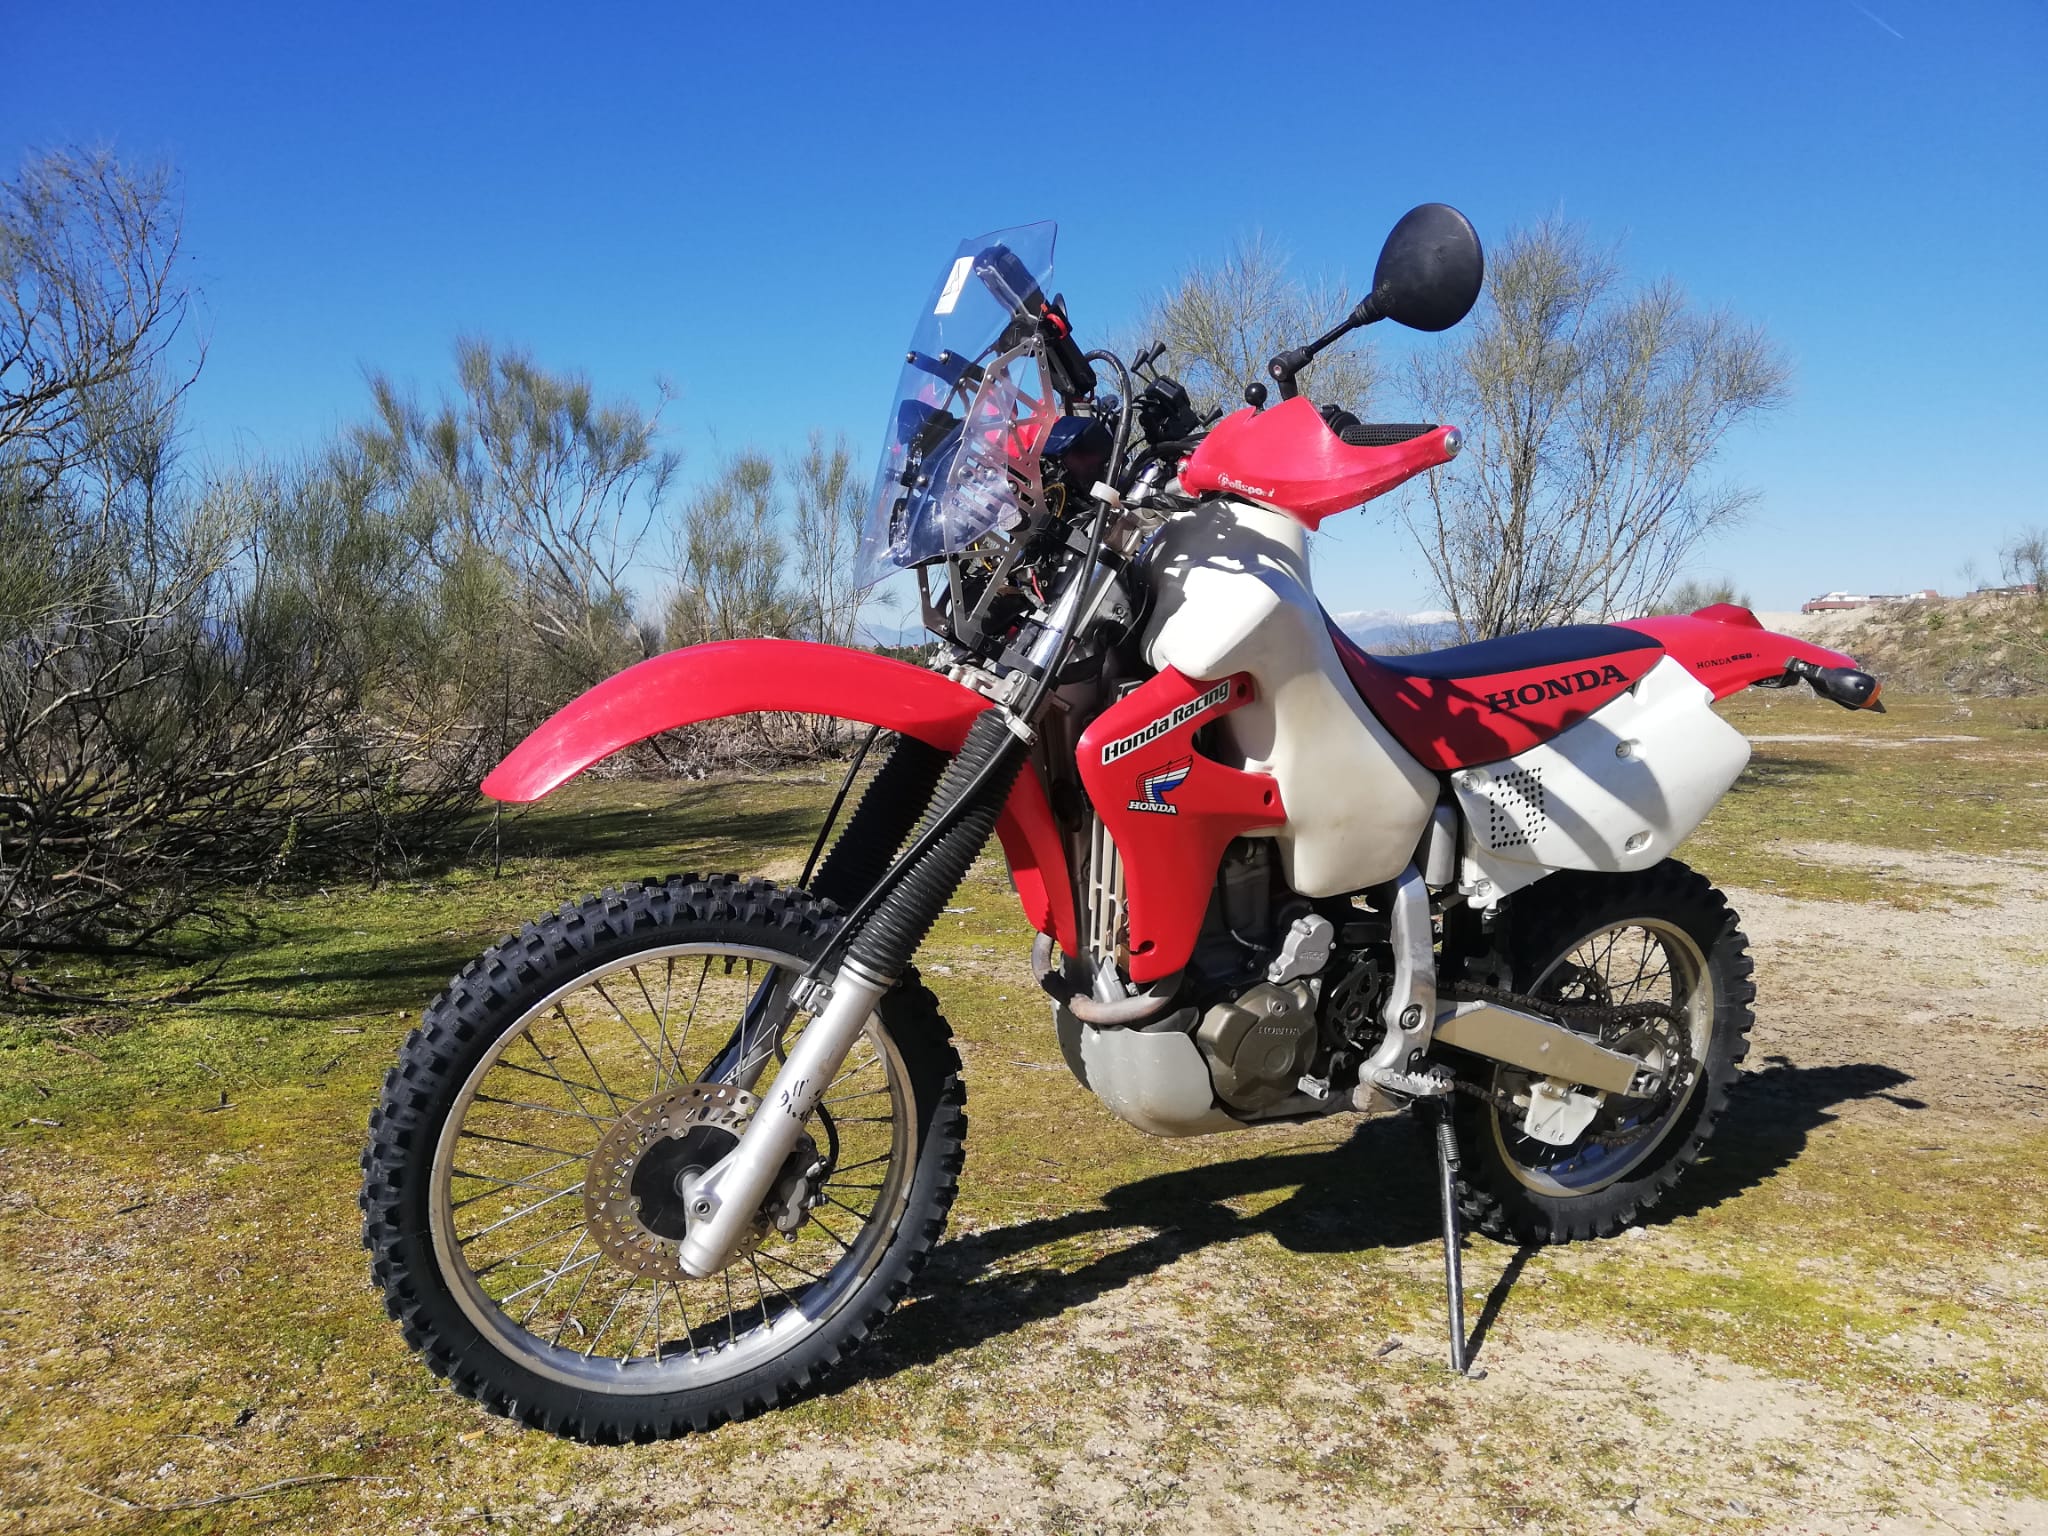 Soporte de navegación móvil Universal para moto Enduro Trail